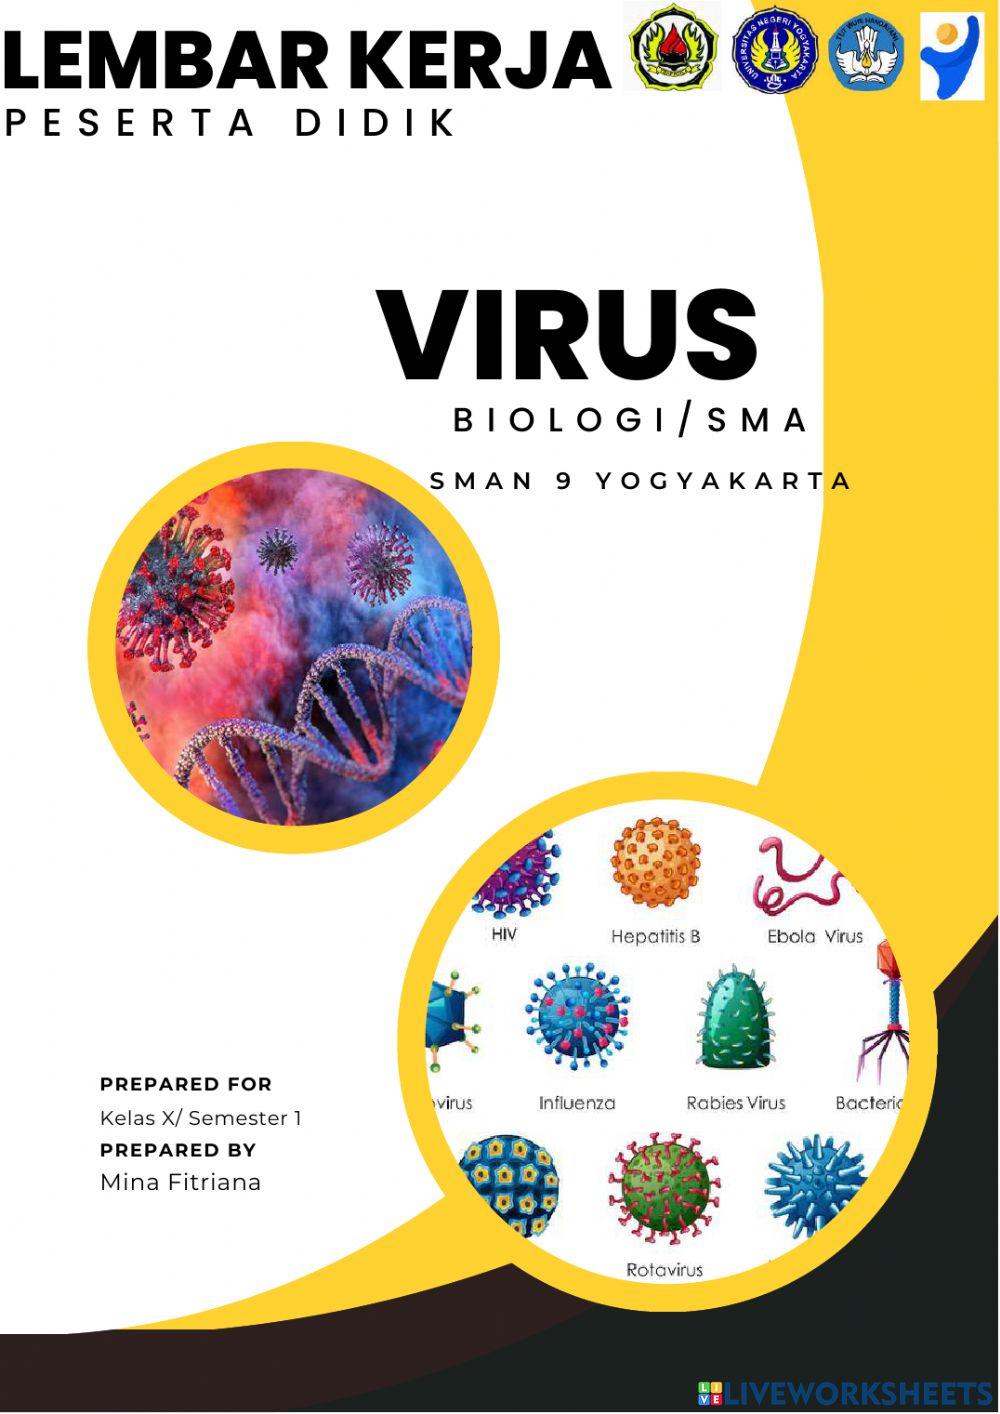 Topik sejarah dan struktur virus